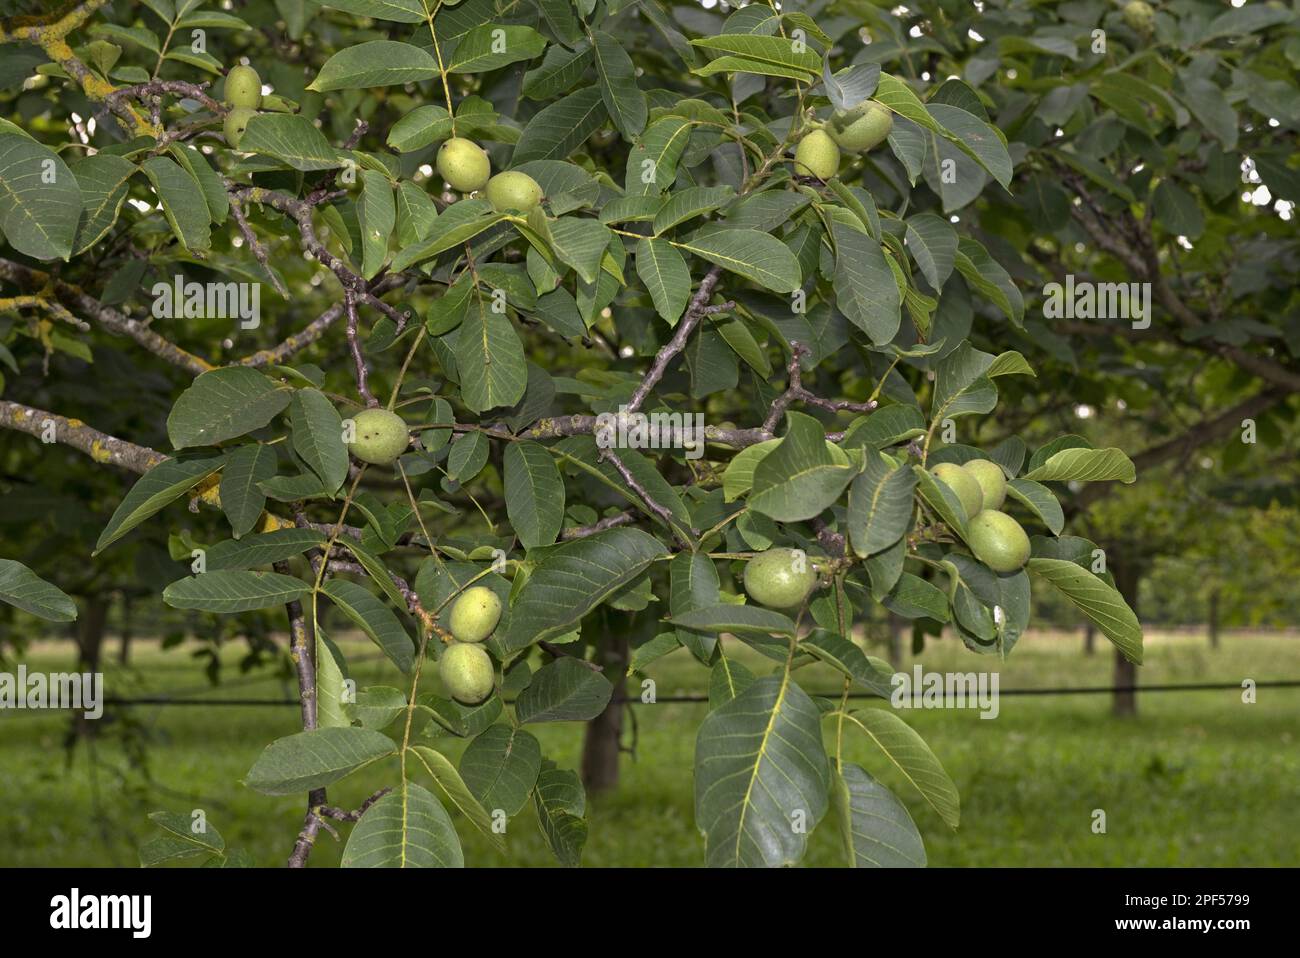 Walnut, walnut tree, walnuts, walnuts, walnut family, walnuts in fruit on trees, Sainte-Foy-la-Grande, Gironde, France Stock Photo